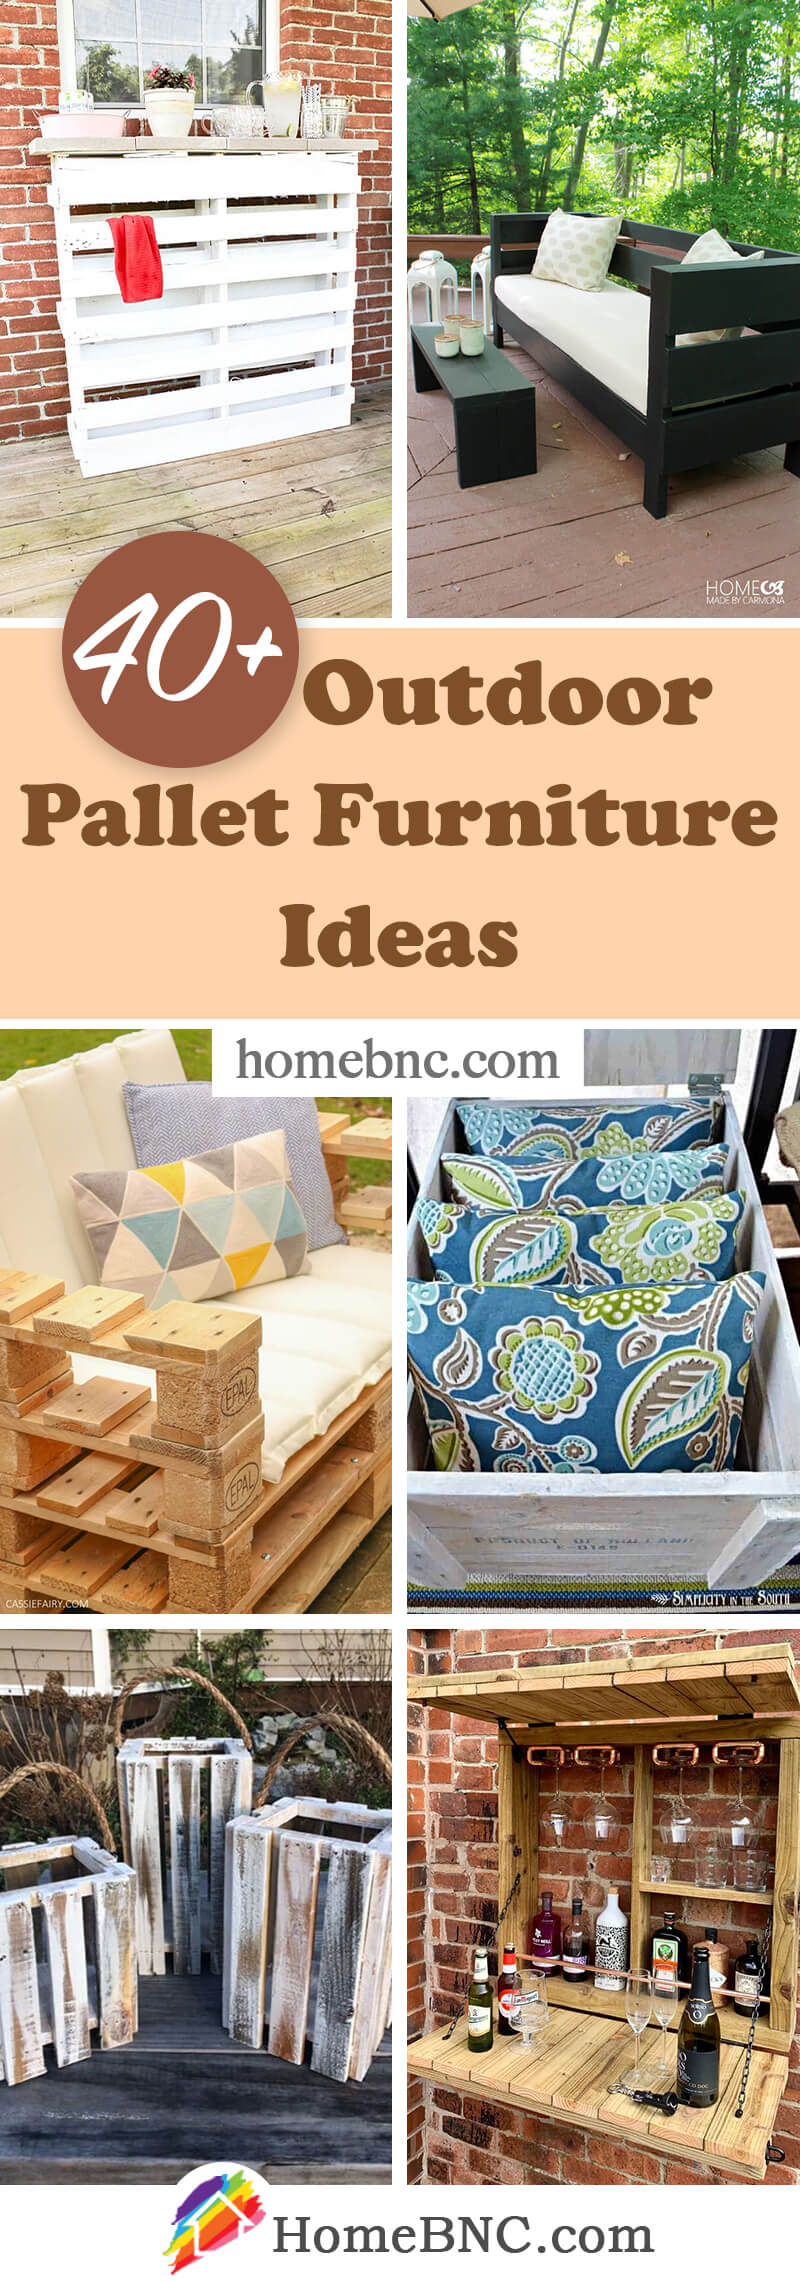 Outdoor Pallet Furniture Ideas